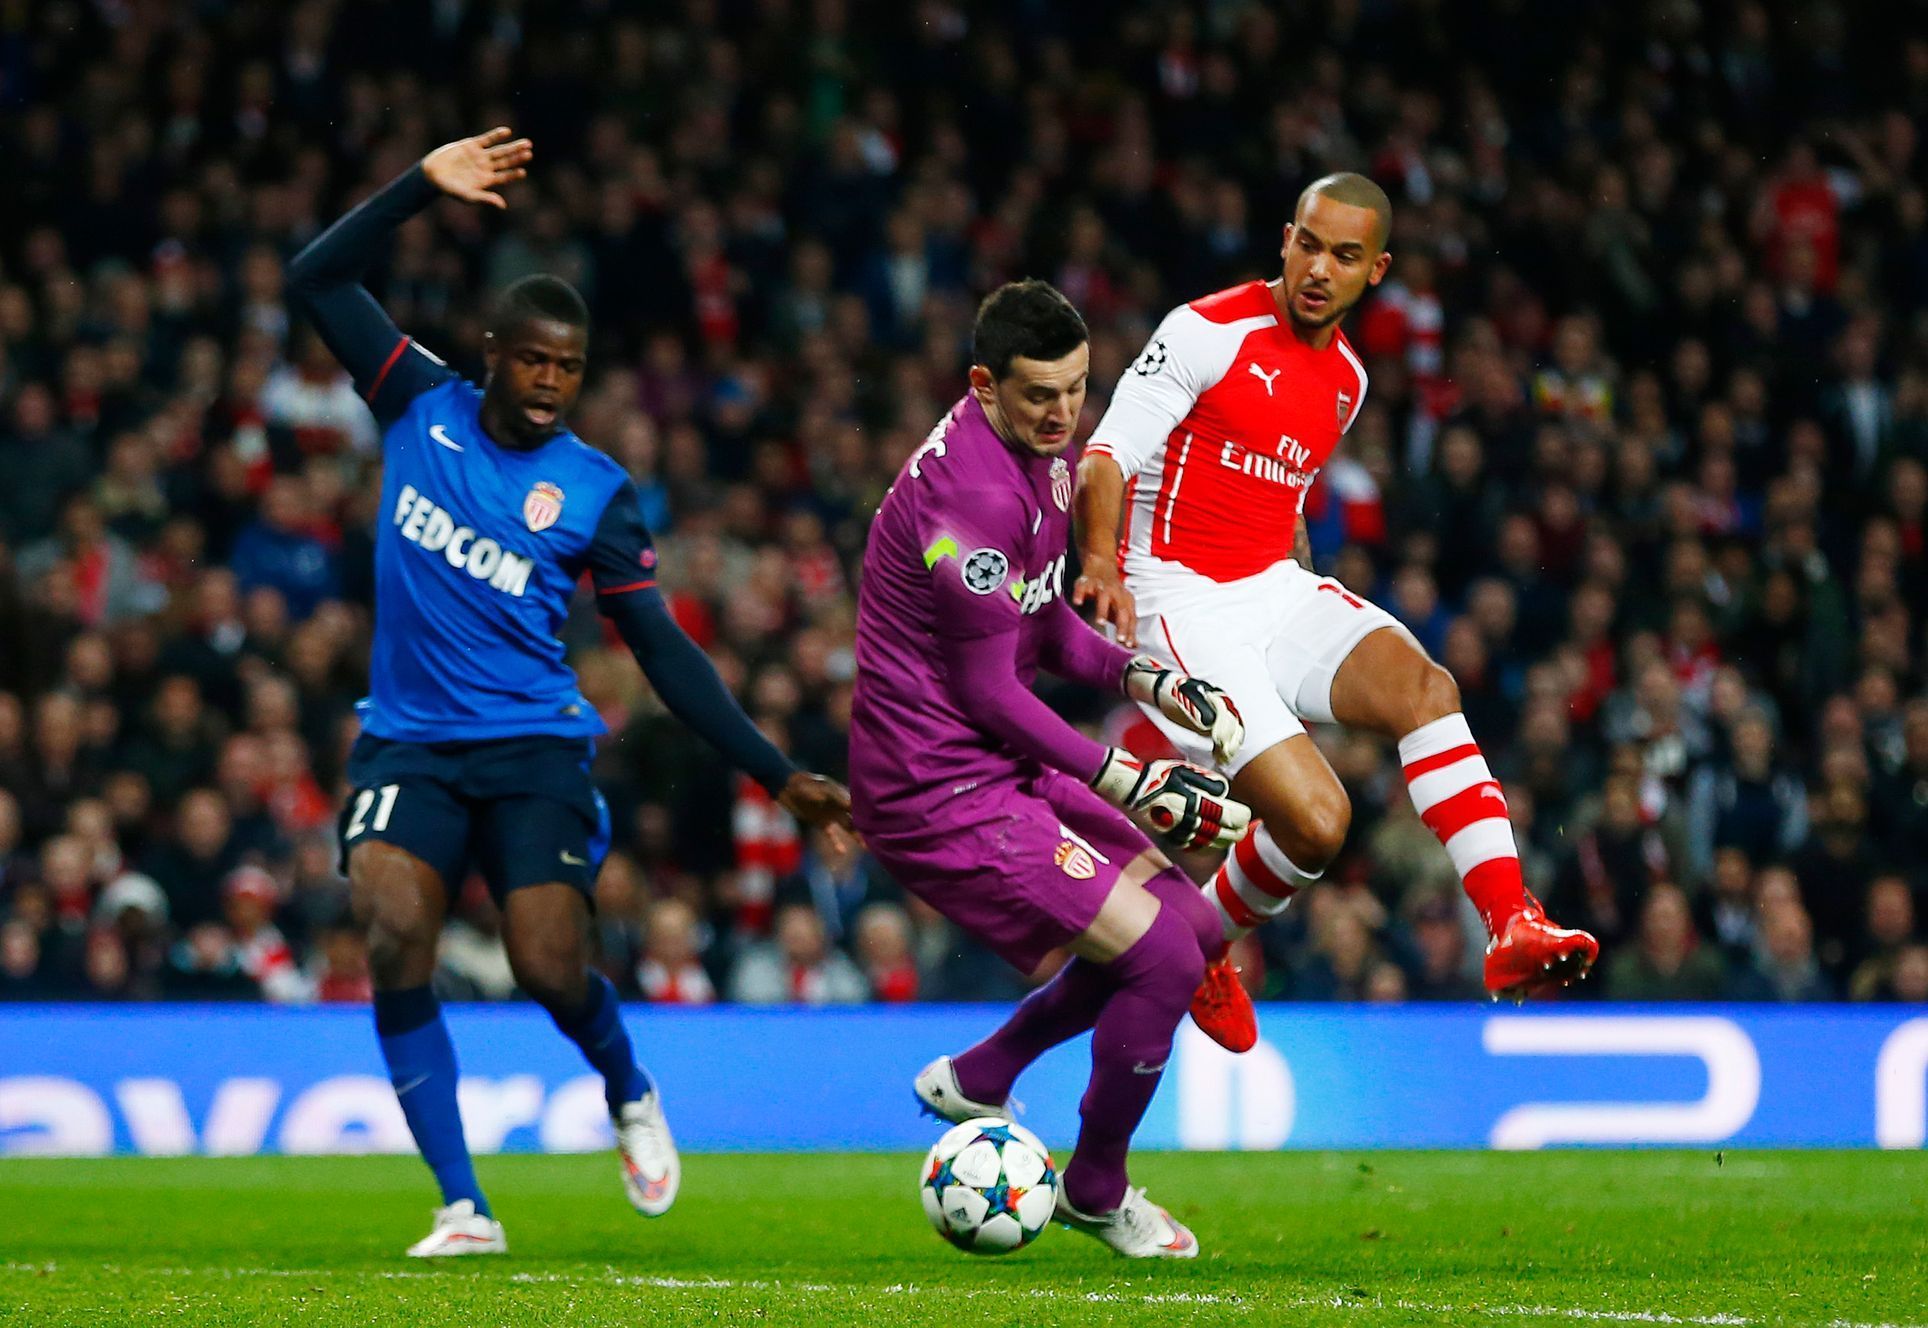 Football: Arsenal's Theo Walcott in action with Monaco's Danijel Subasic as Elderson looks on